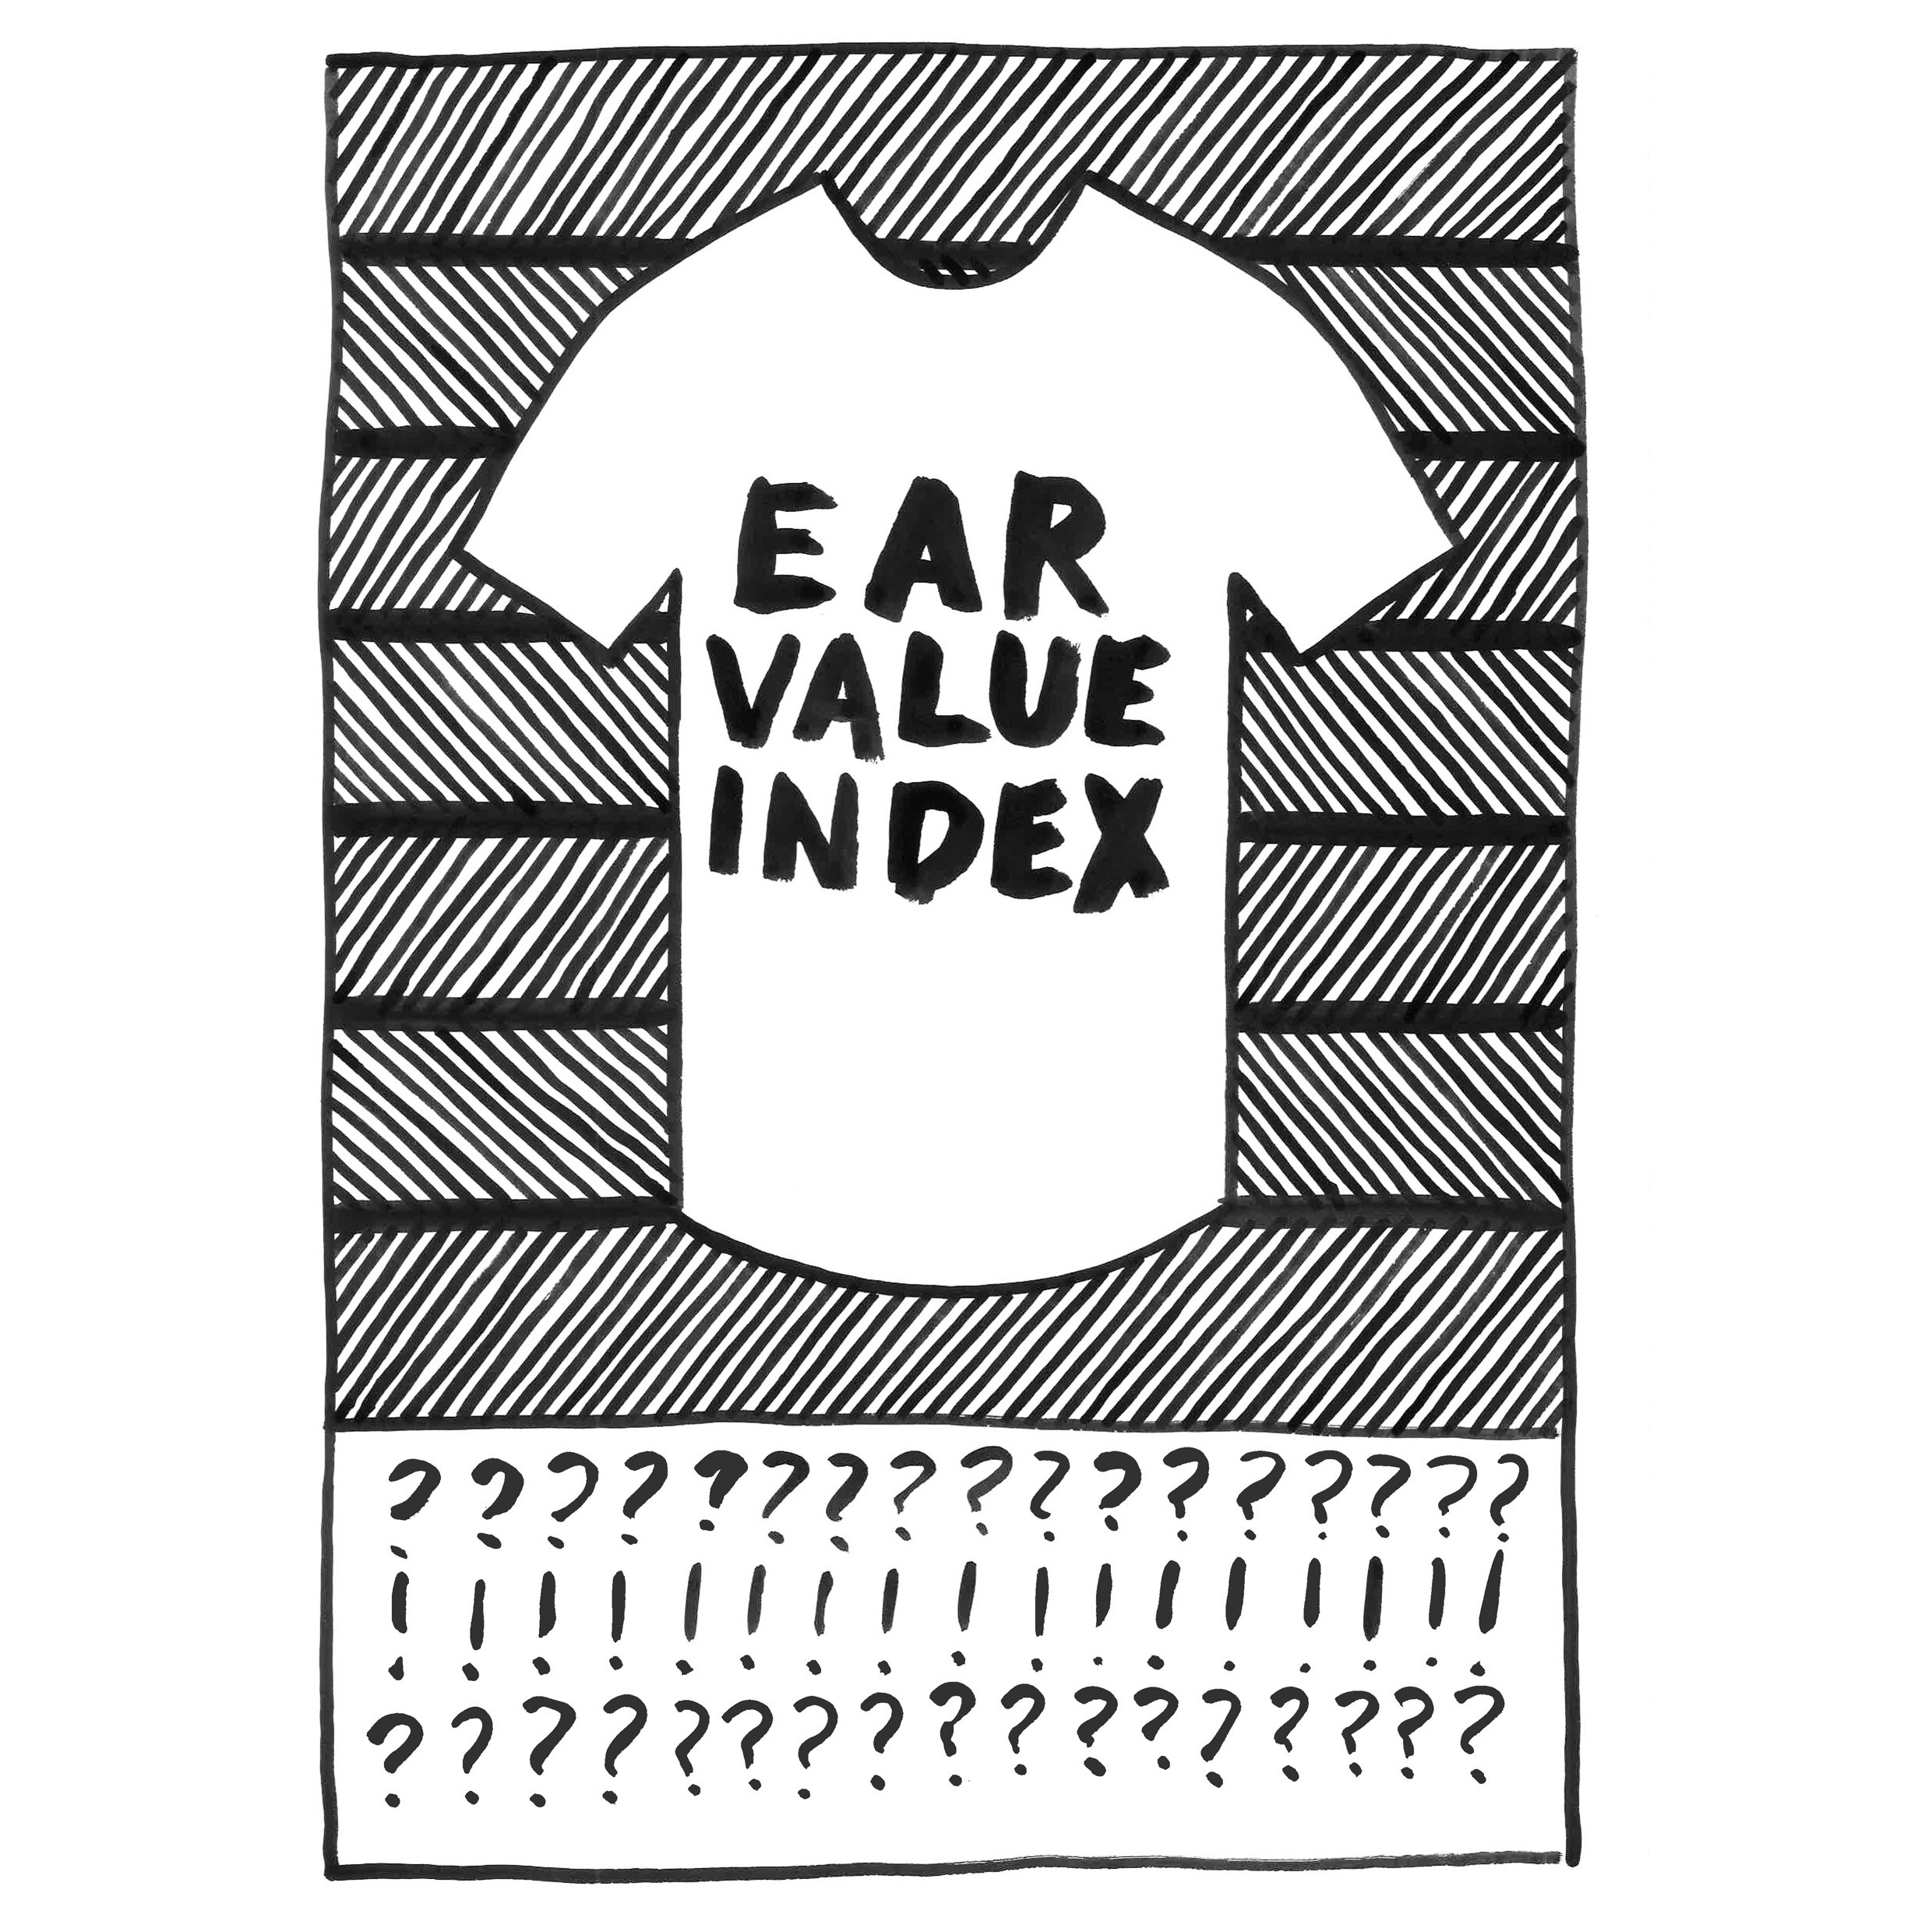 Ear Value Index.jpg